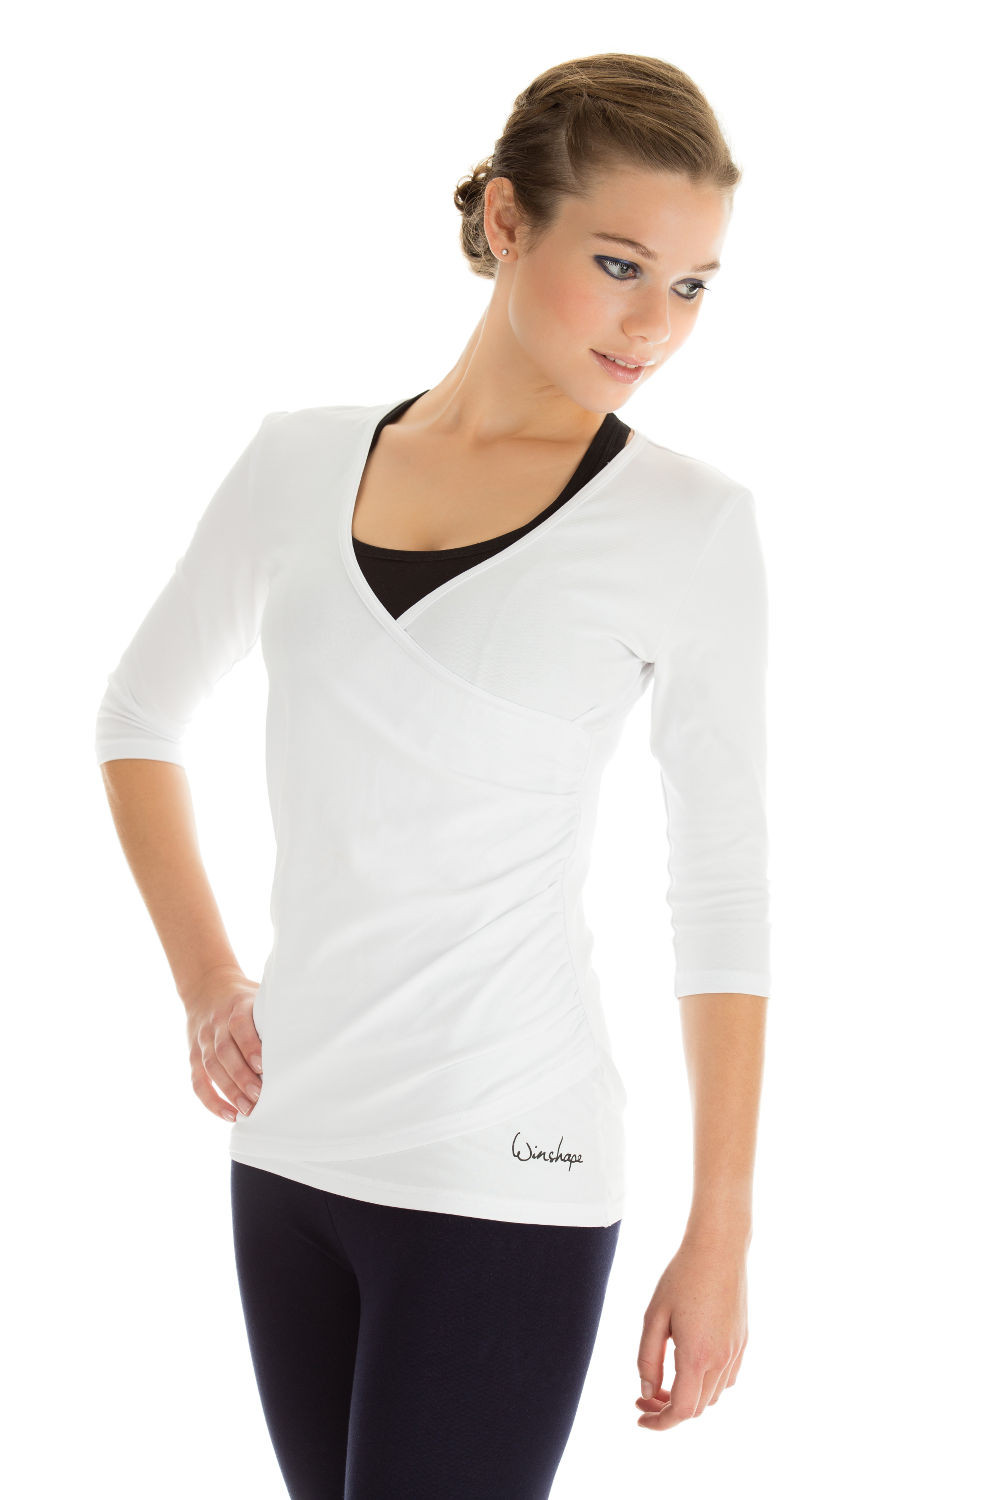 ¾-Arm Shirt in Wickeloptik WS3, weiß, Winshape Flow Style